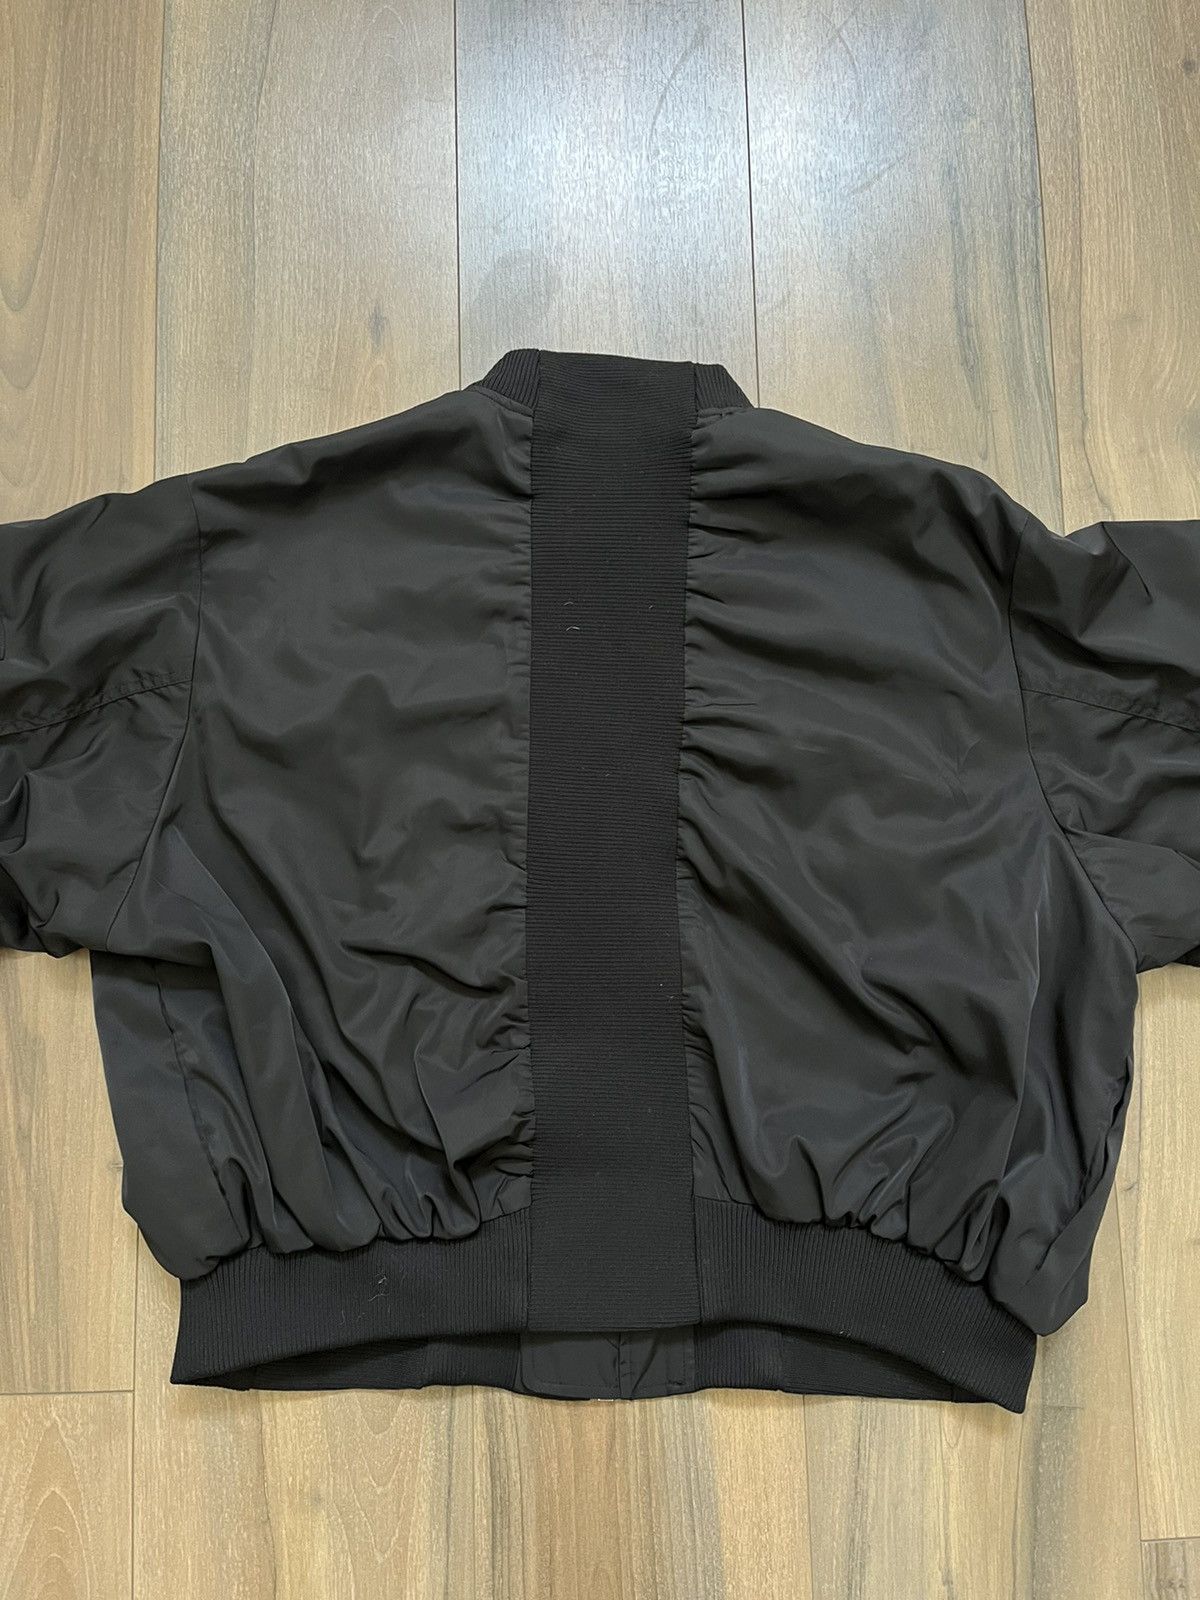 CMMAWEAR Fffpostalservice black Ma-1 bomber jacket | Grailed